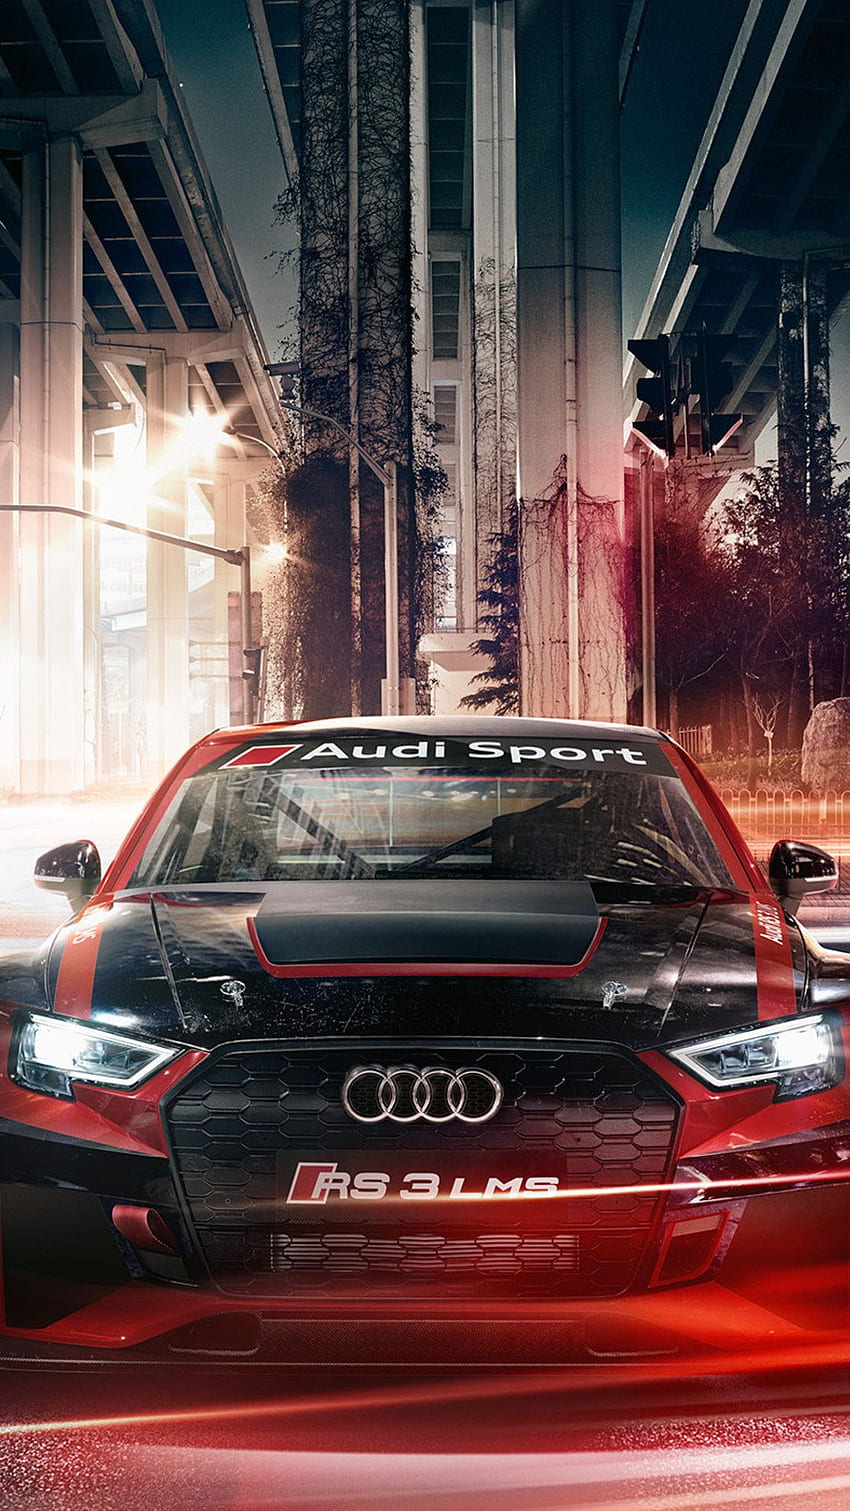 Audi Rs 3 in Auflösung. Audi rs, Luxusautos audi, Audi, Audi RS3 Limousine HD-Handy-Hintergrundbild